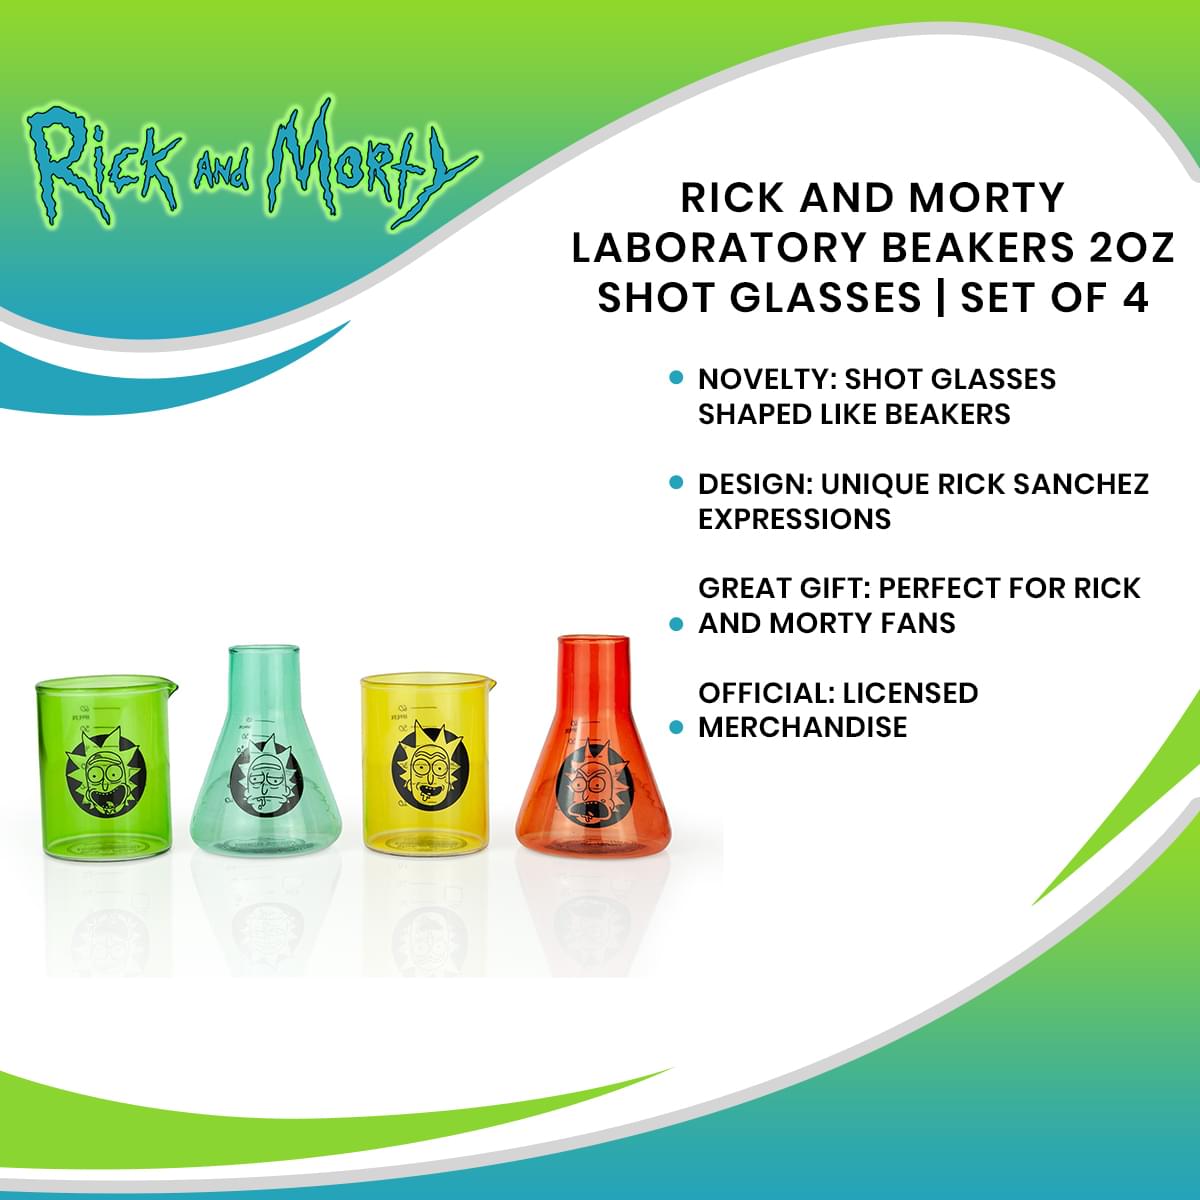 Rick and Morty Laboratory Beakers 2oz Shot Glasses | Set of 4